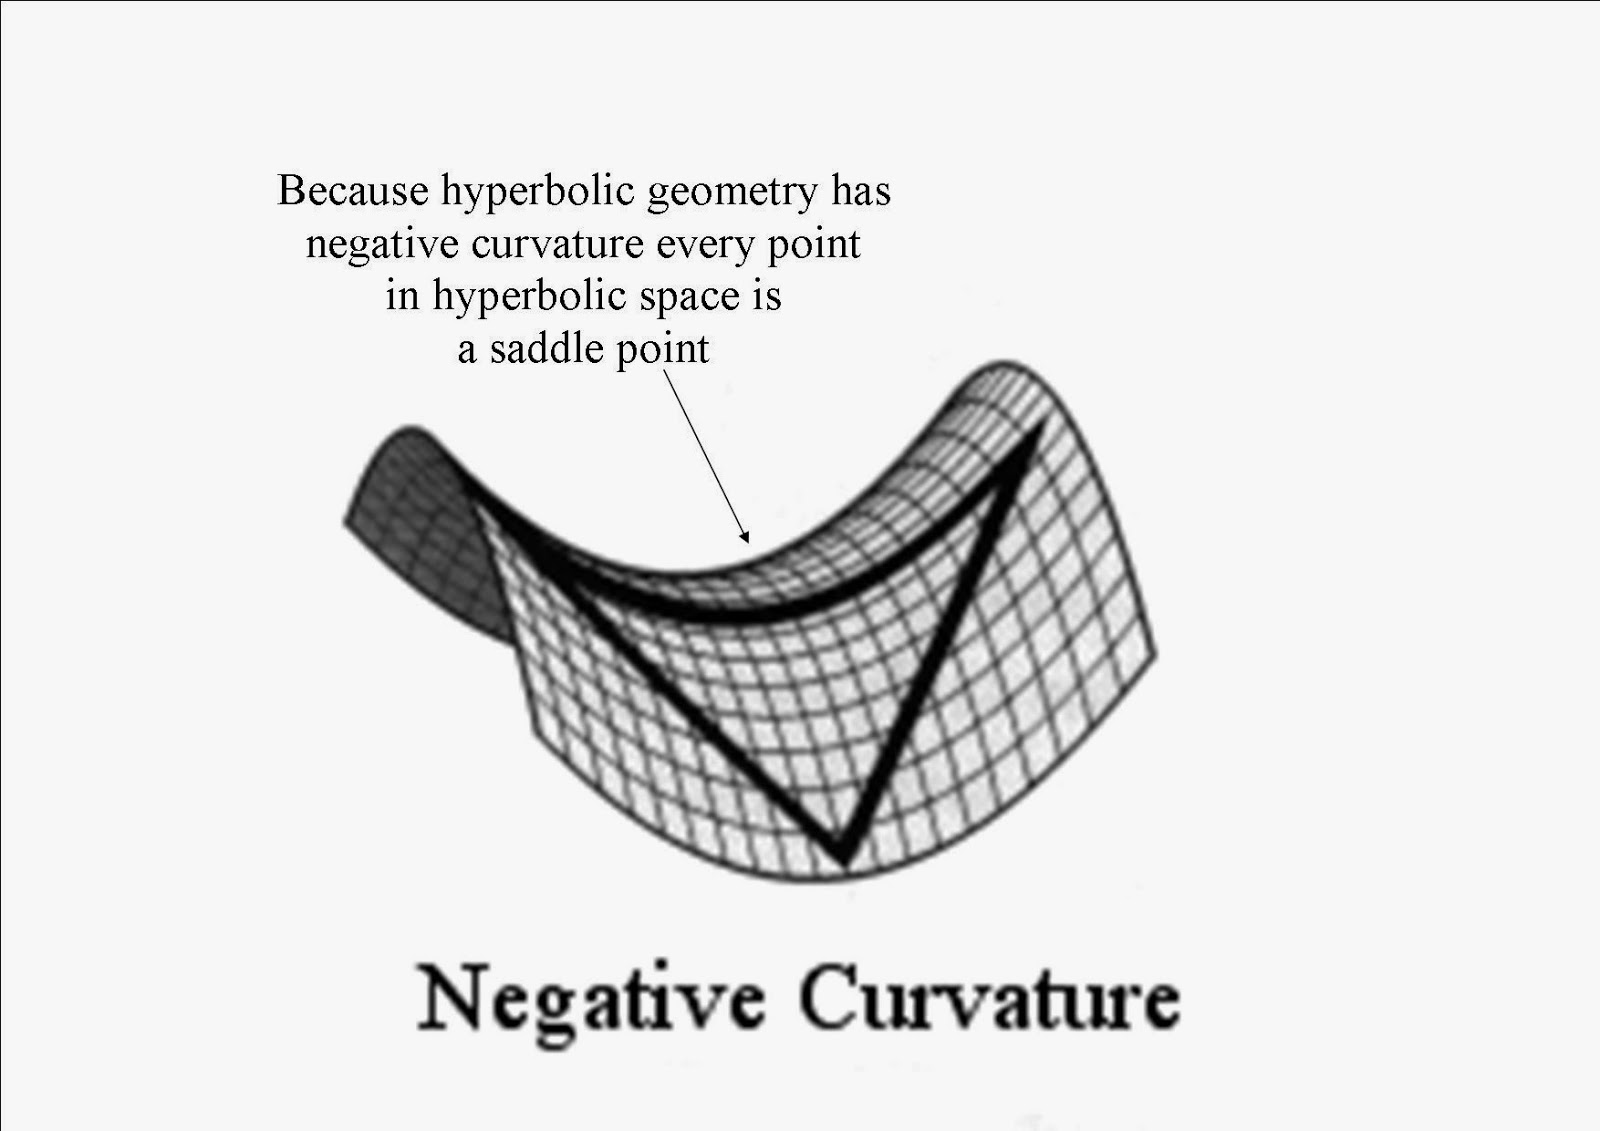 Positive+and+negative+curvature+sadle+point.jpg